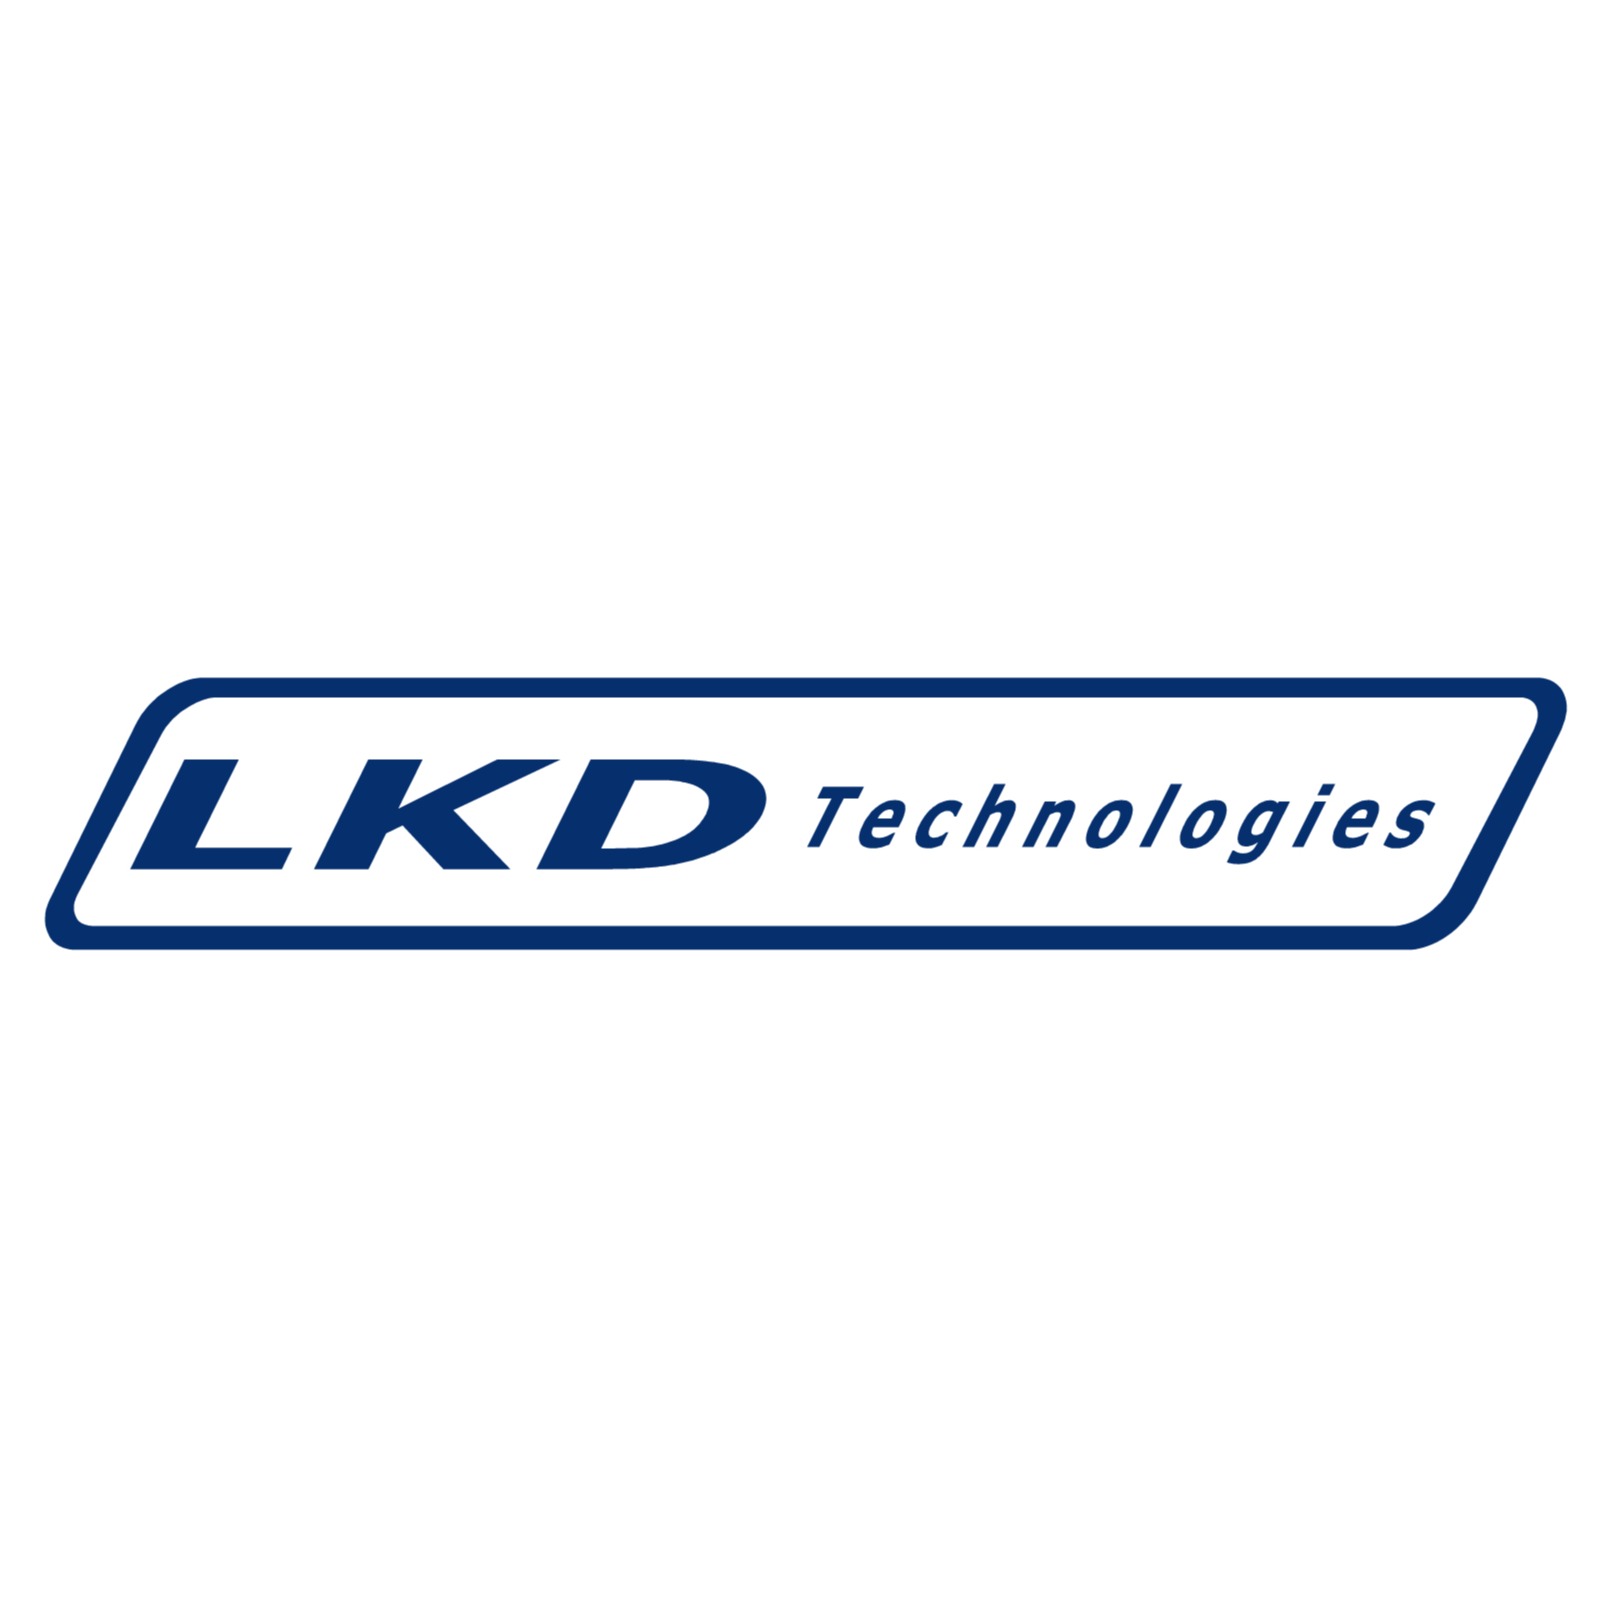 LKD Technologies 